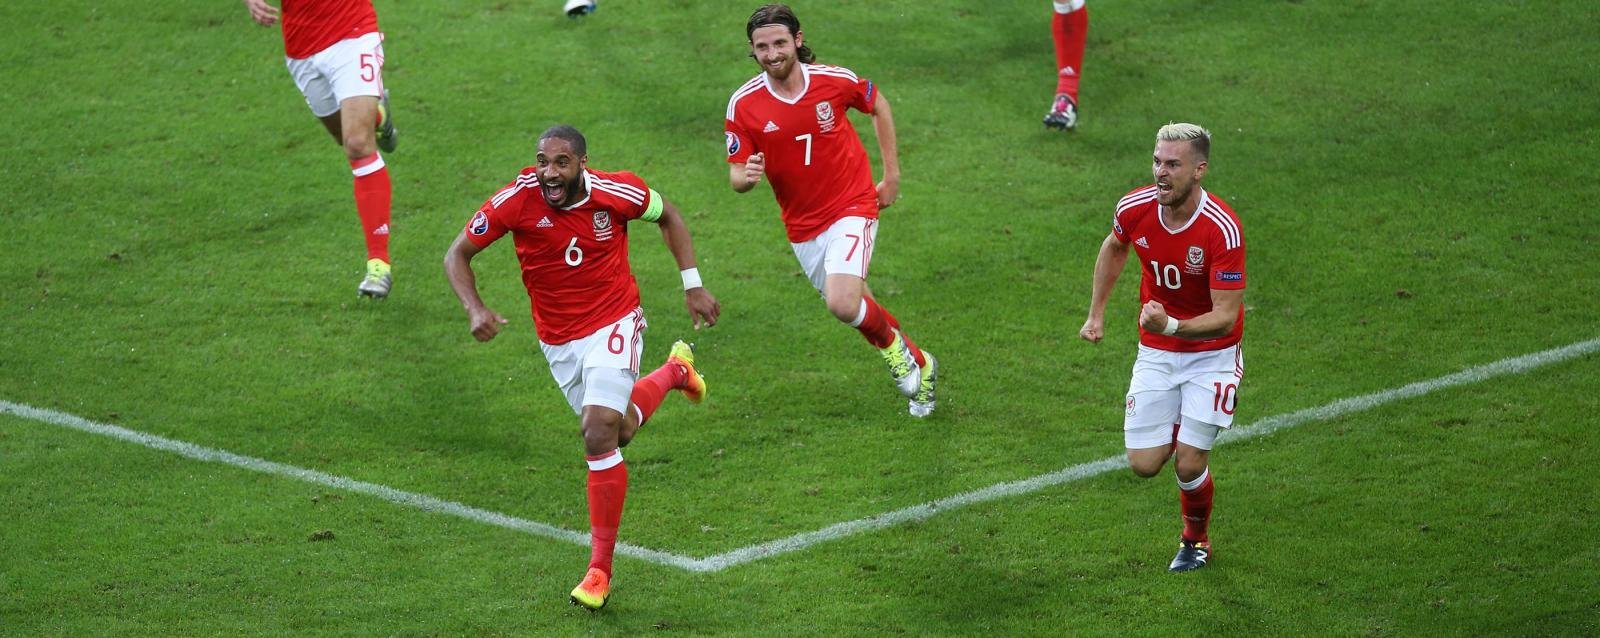 Profile: Wales’ quarter-final goalscorer and captain, Ashley Williams